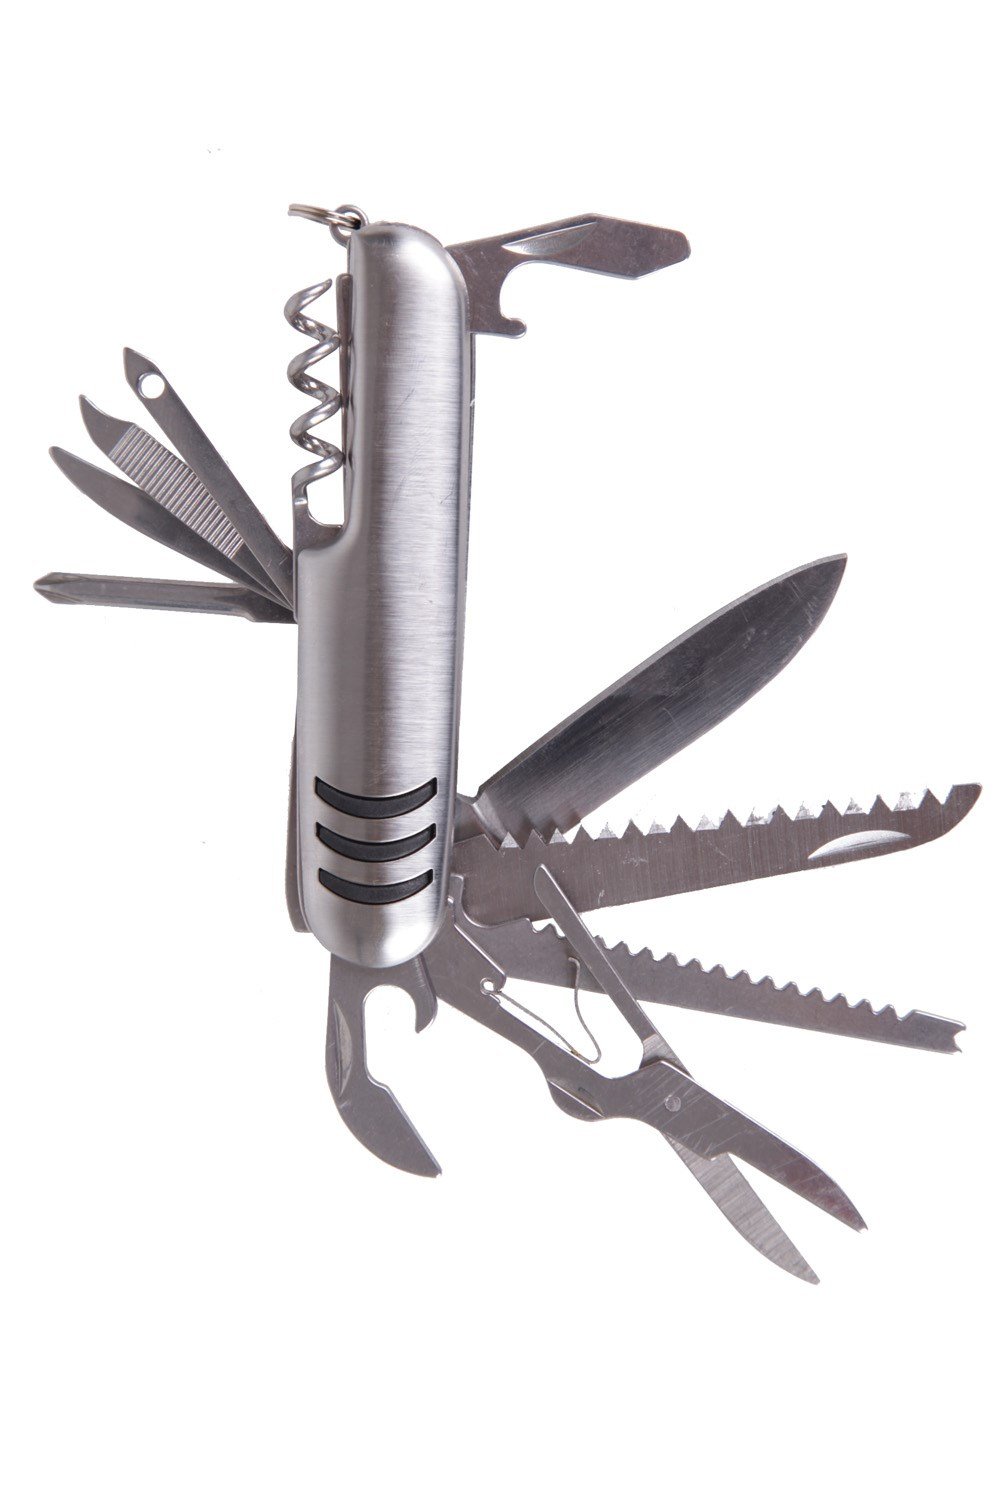 Penknife - 15 In 1 - Silver